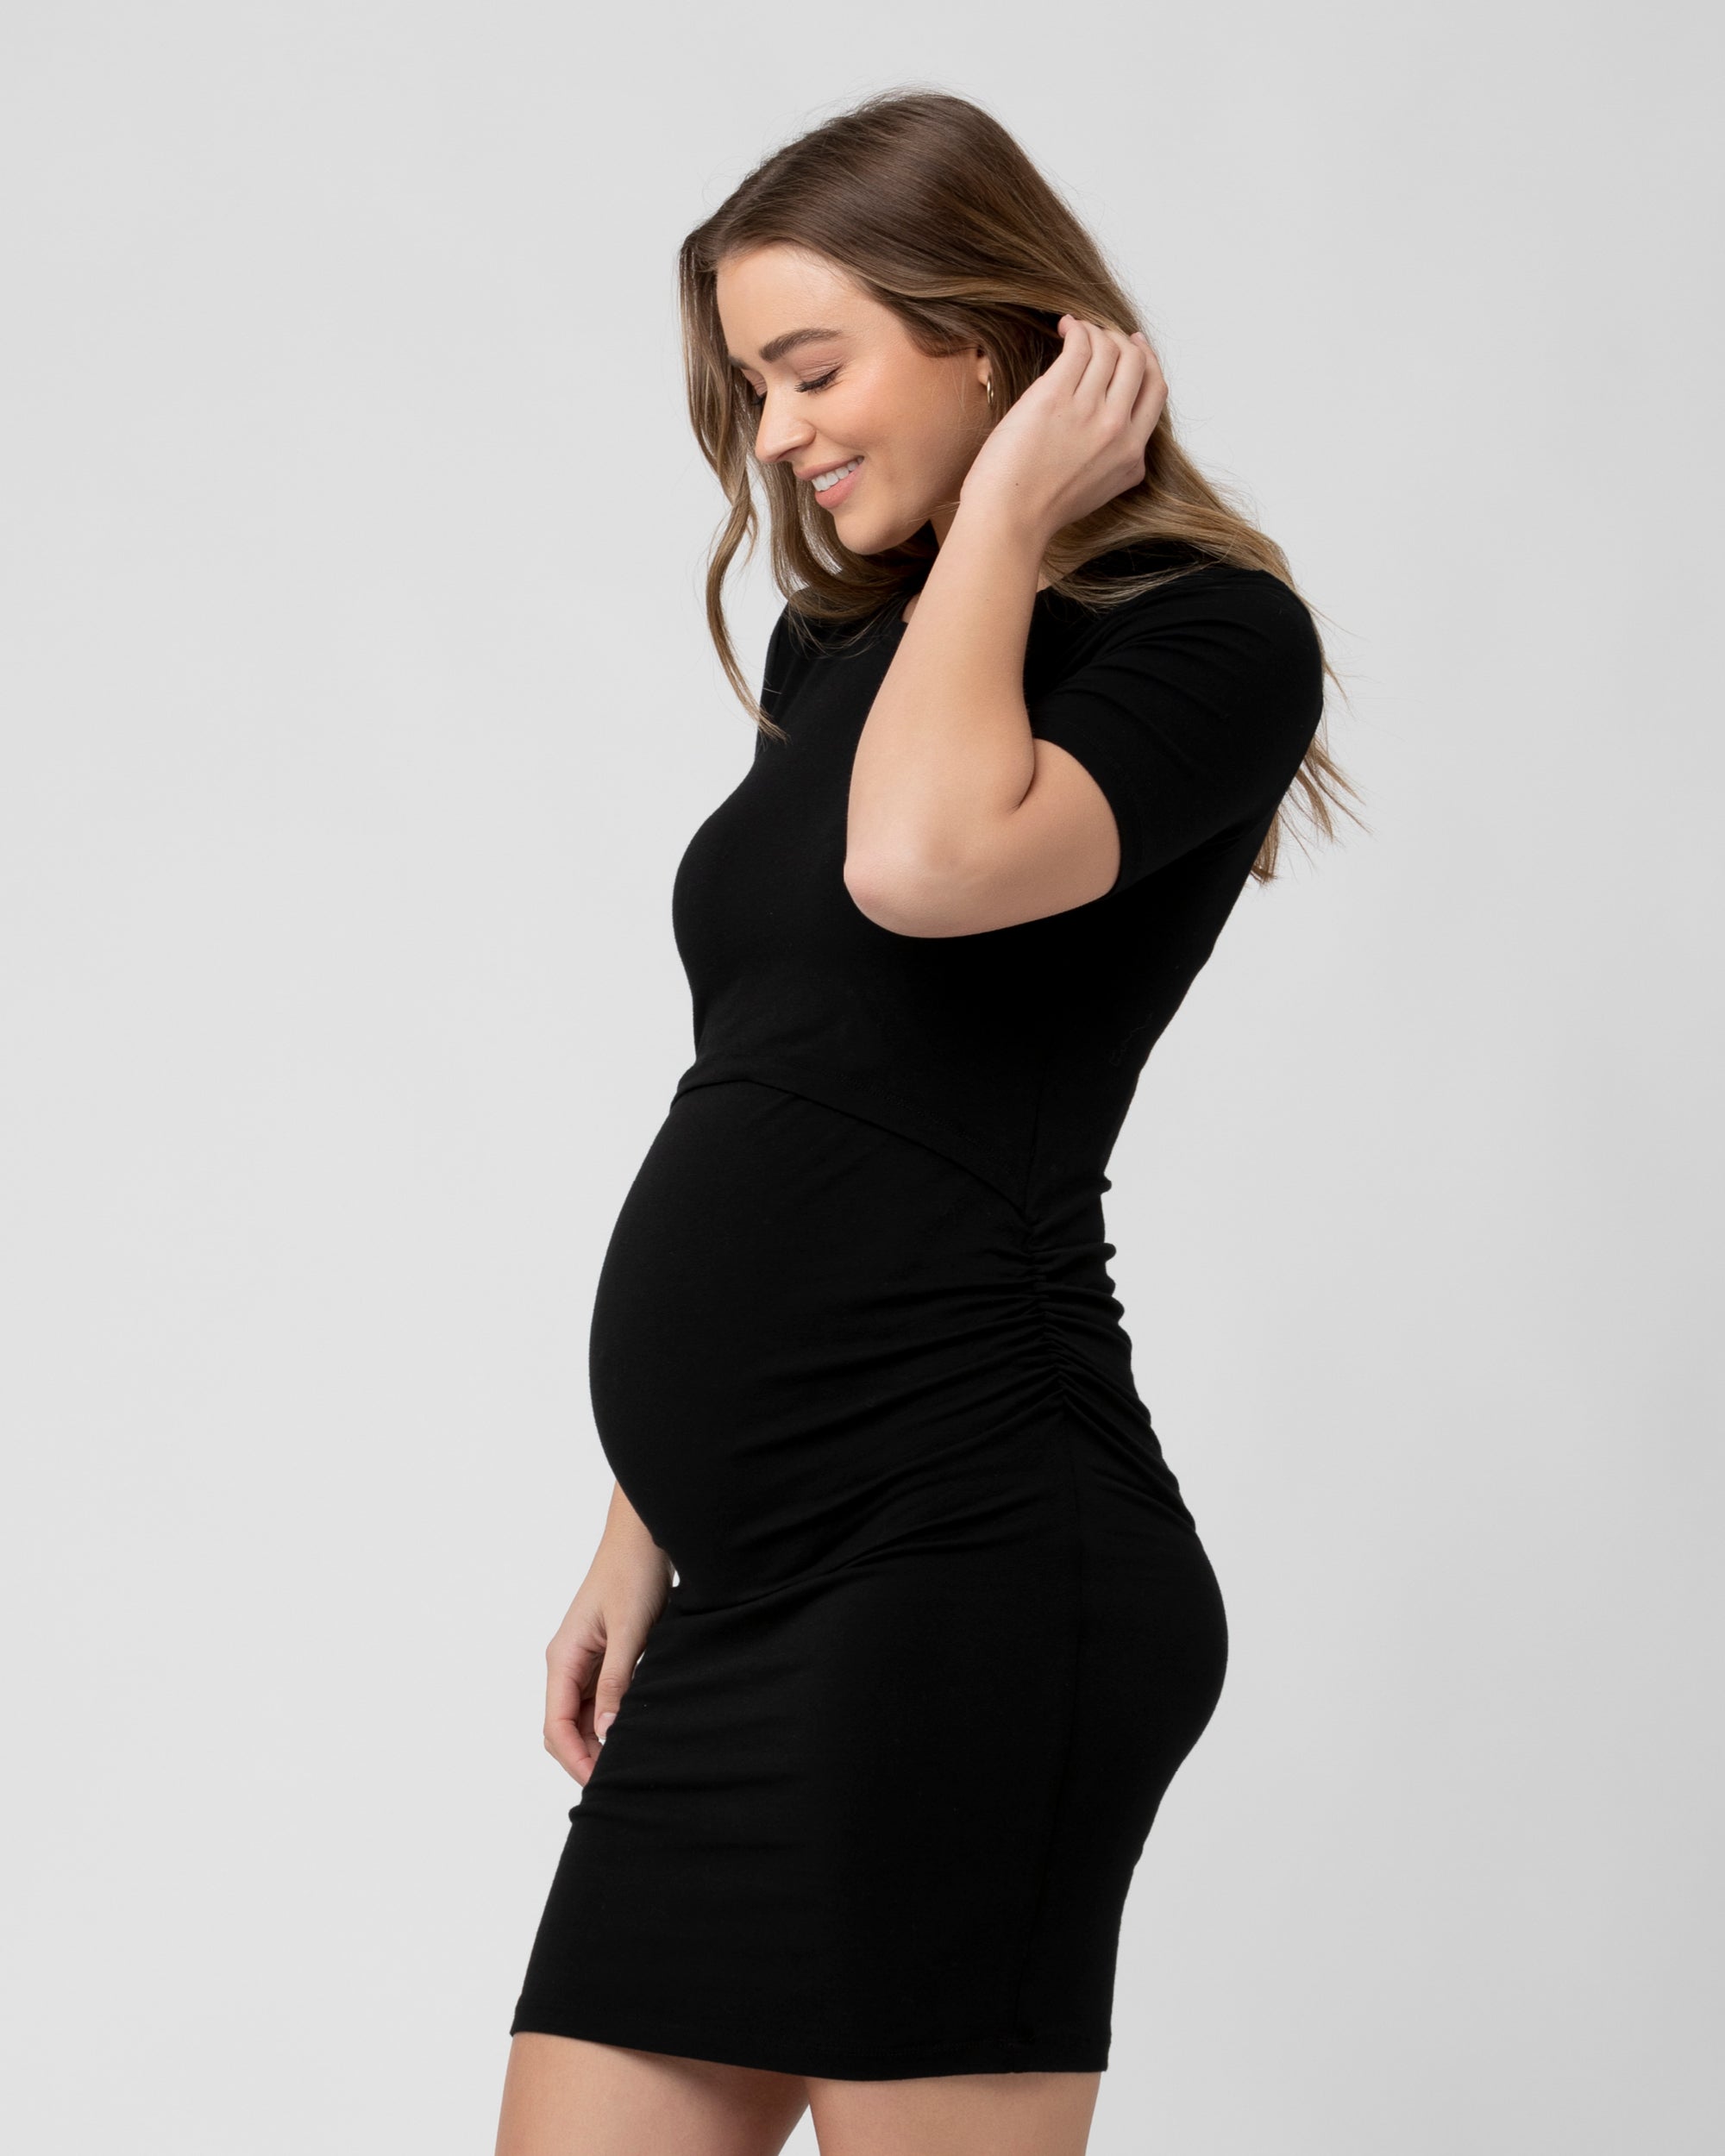 Armoire  Rent this Ripe Maternity Maternity and Nursing Midi Slip Dress